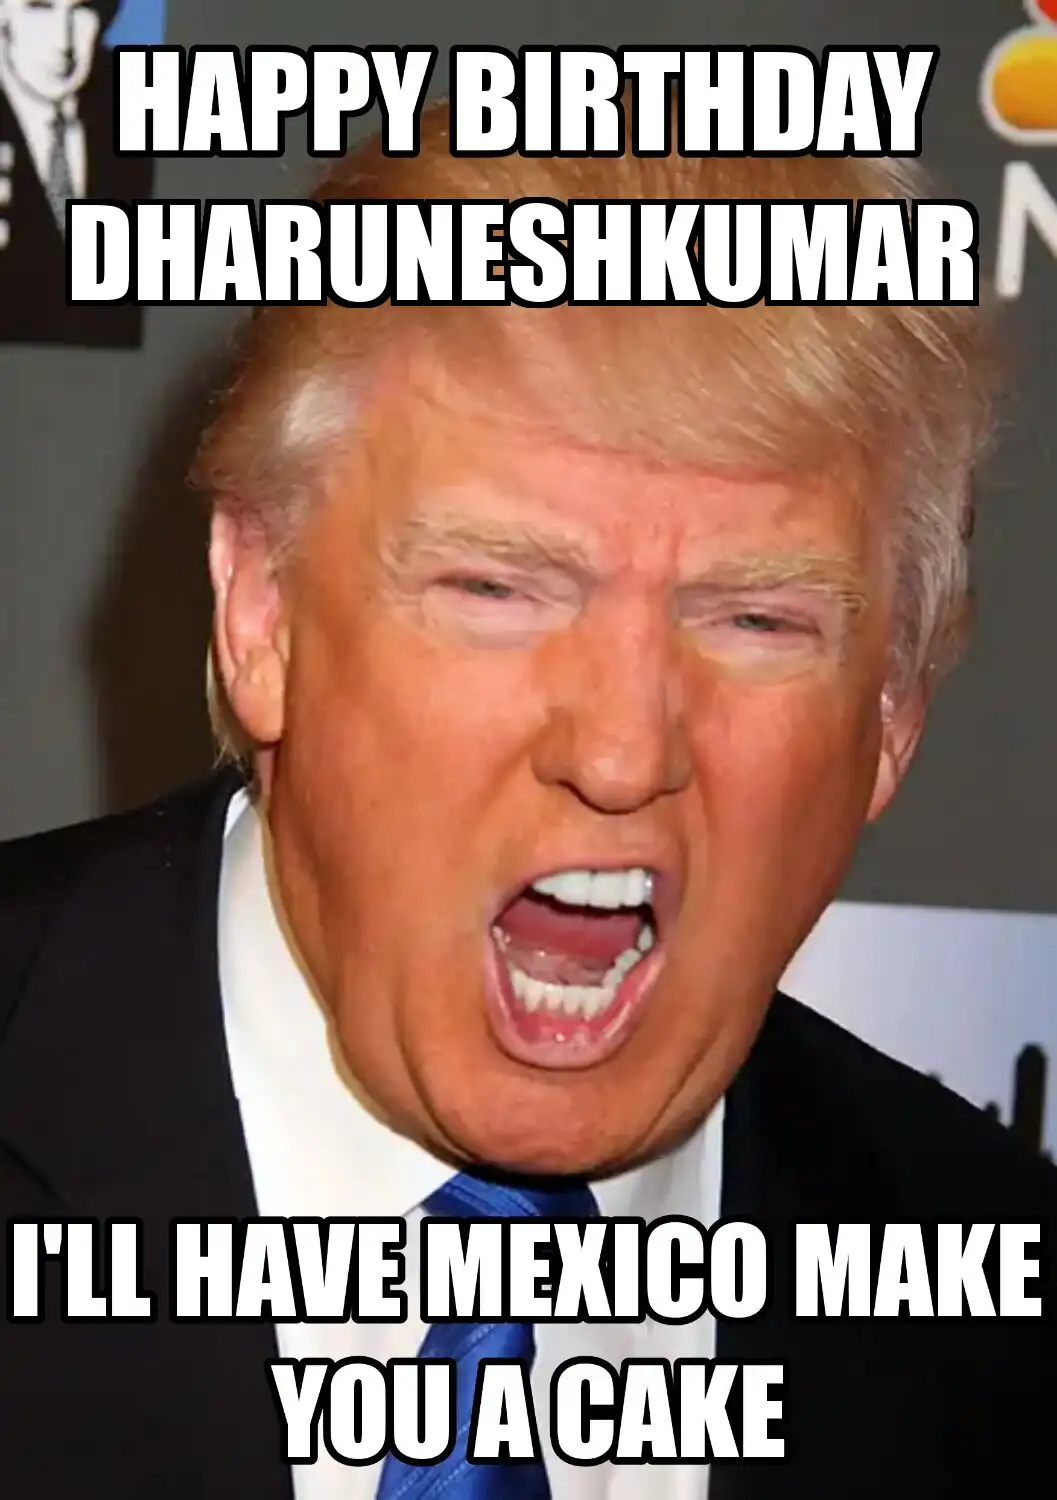 Happy Birthday Dharuneshkumar Mexico Make You A Cake Meme